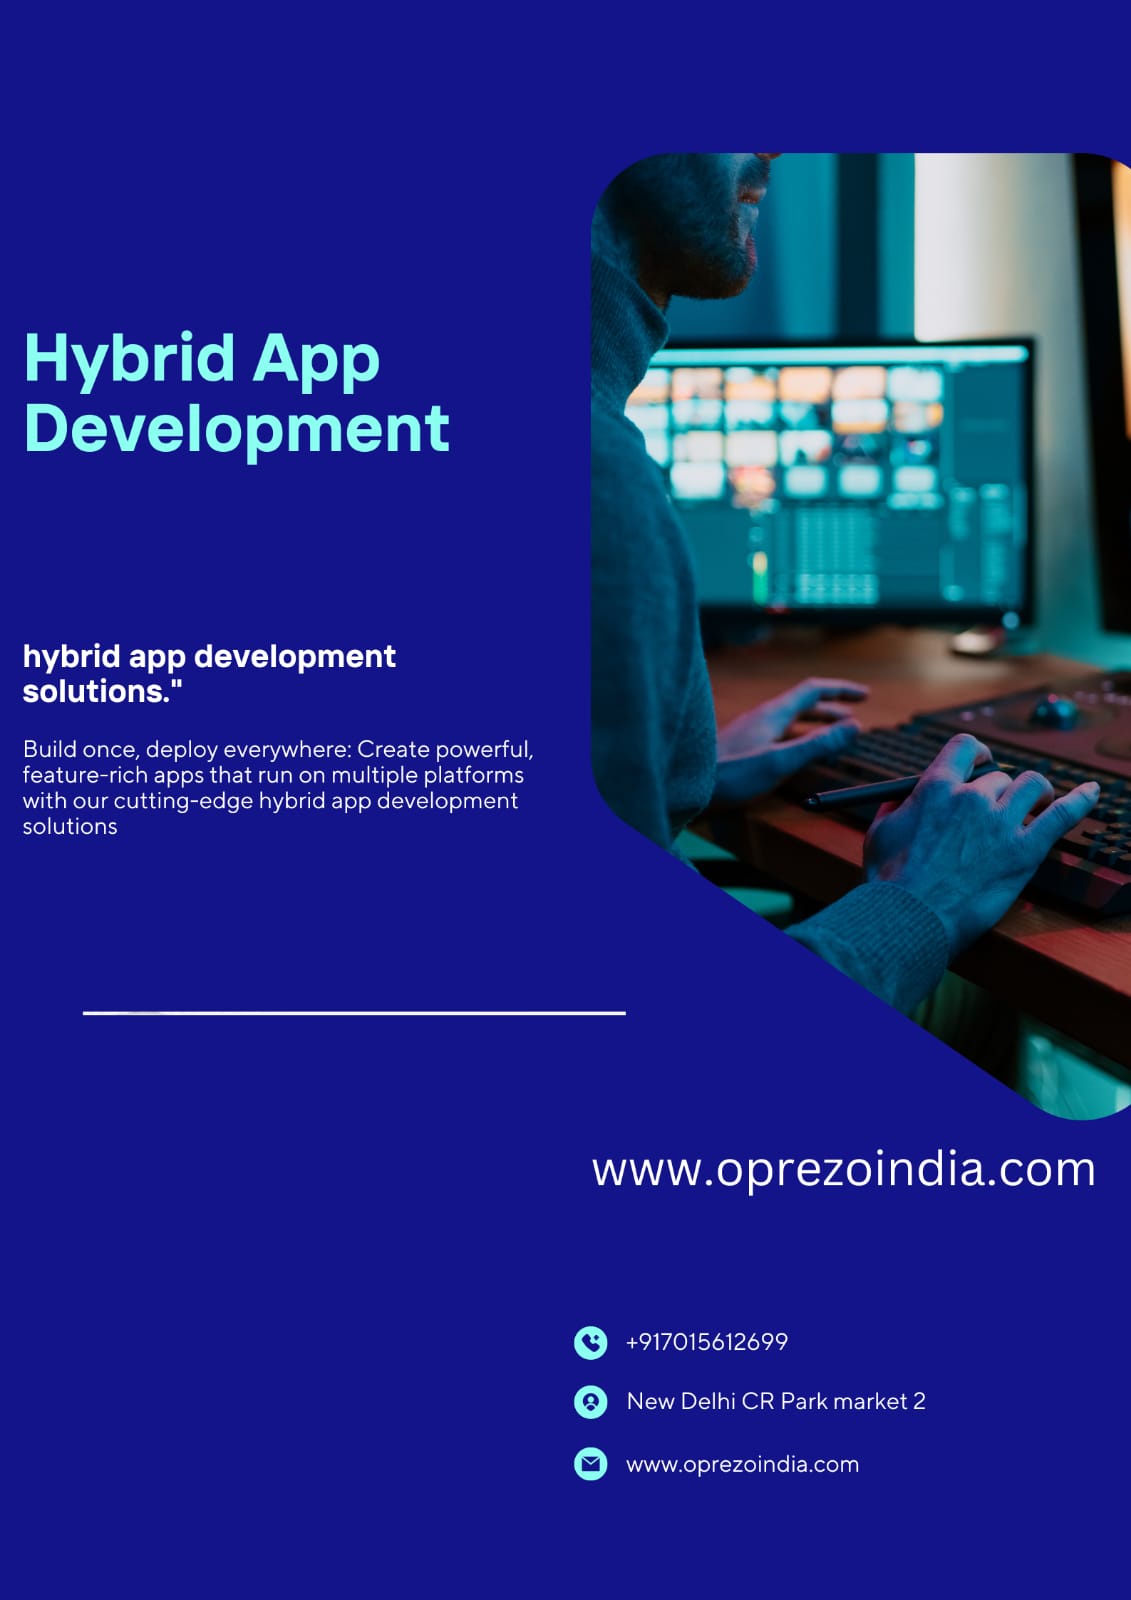 Unlock Seamless Hybrid App Development with Oprzeo India!